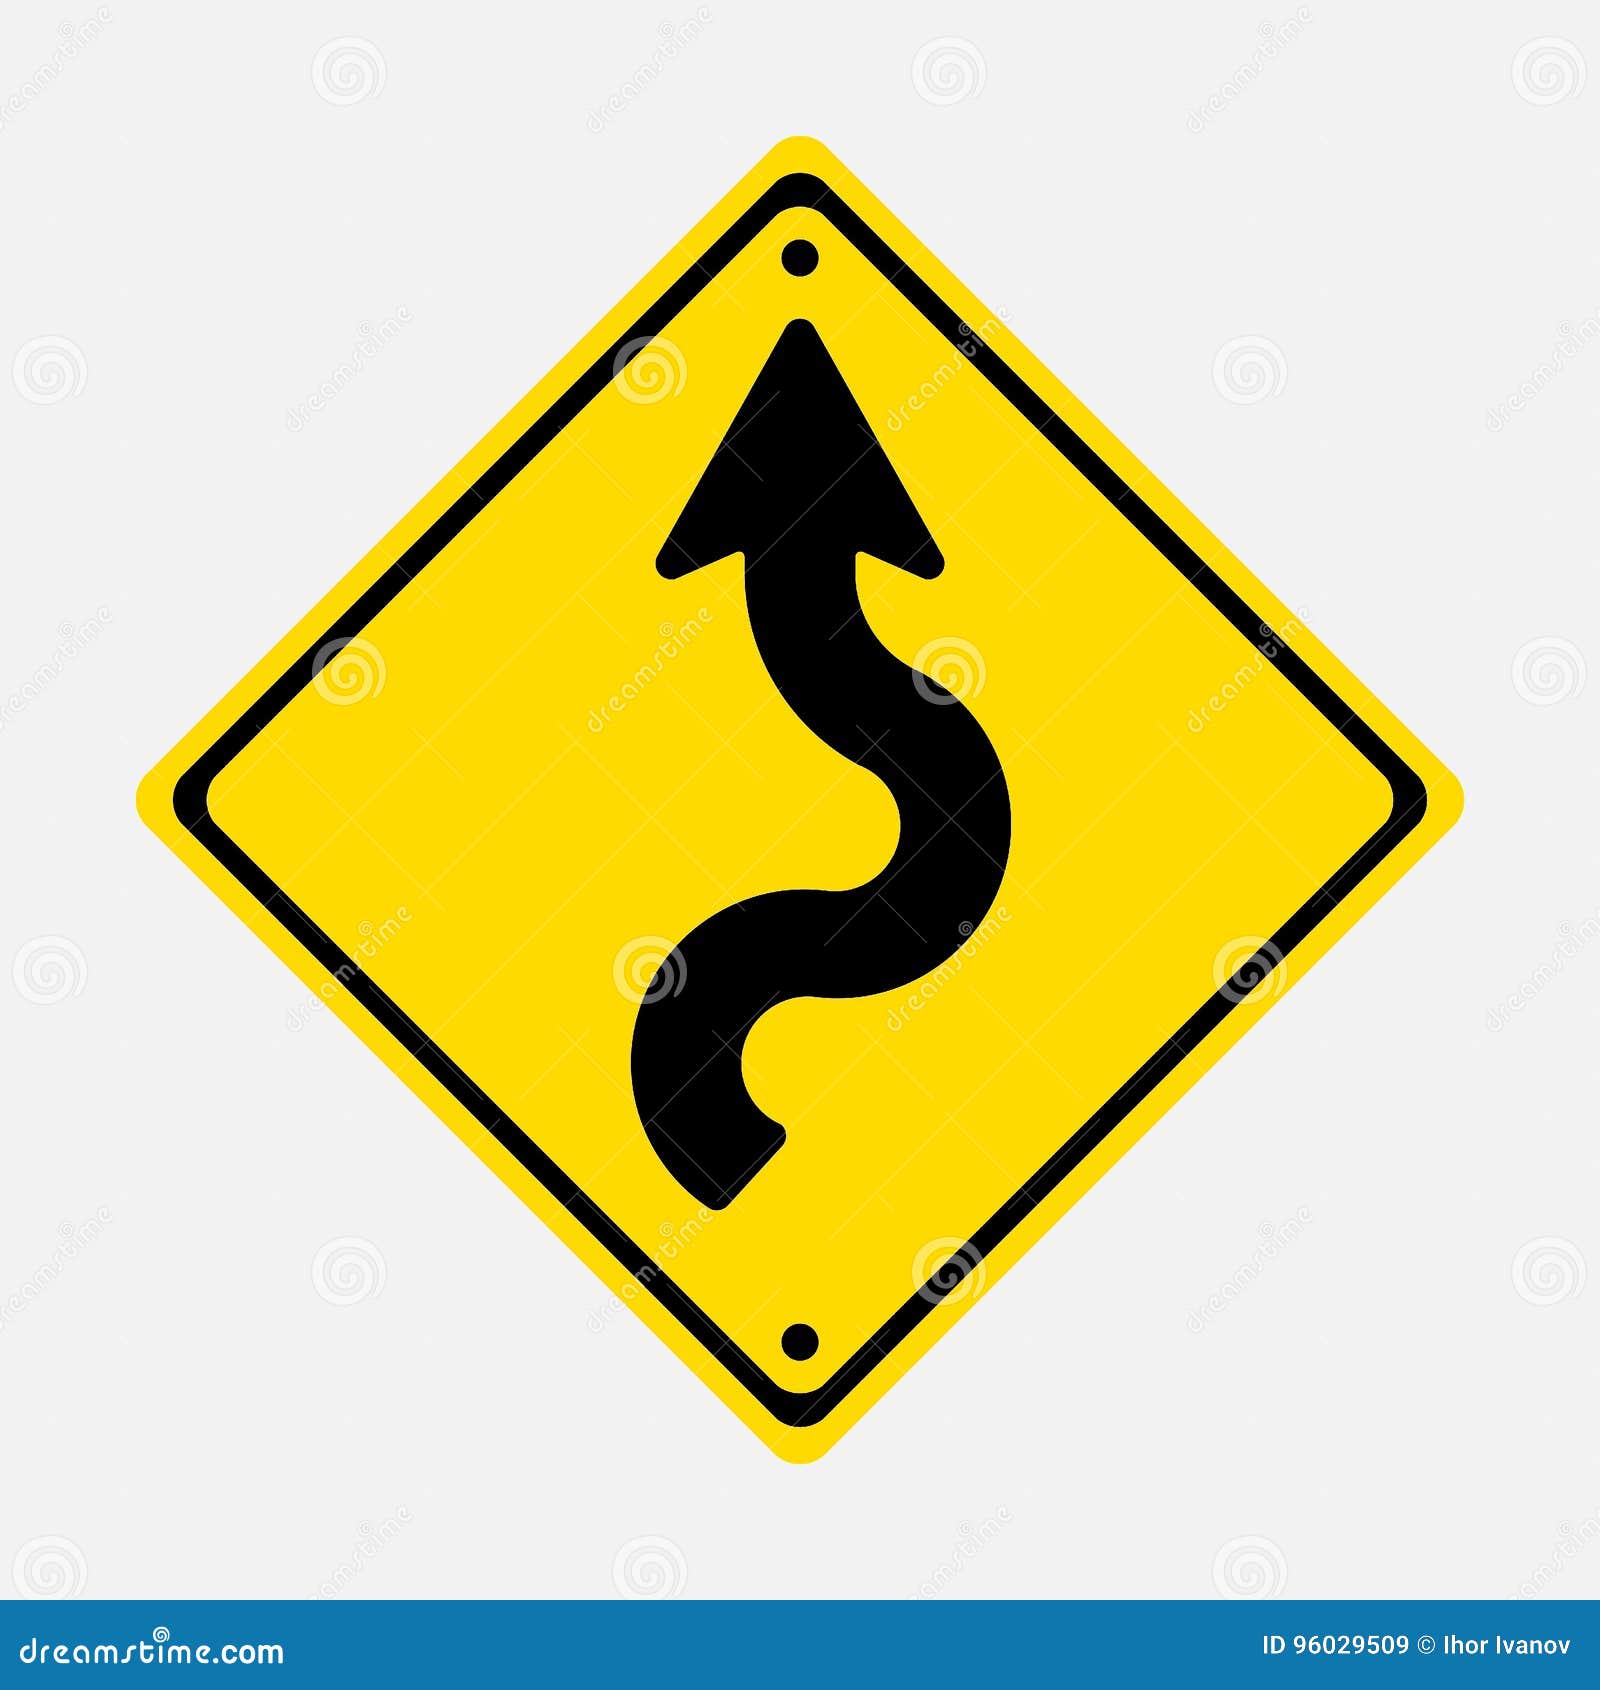 Winding Road Sign Clip Art